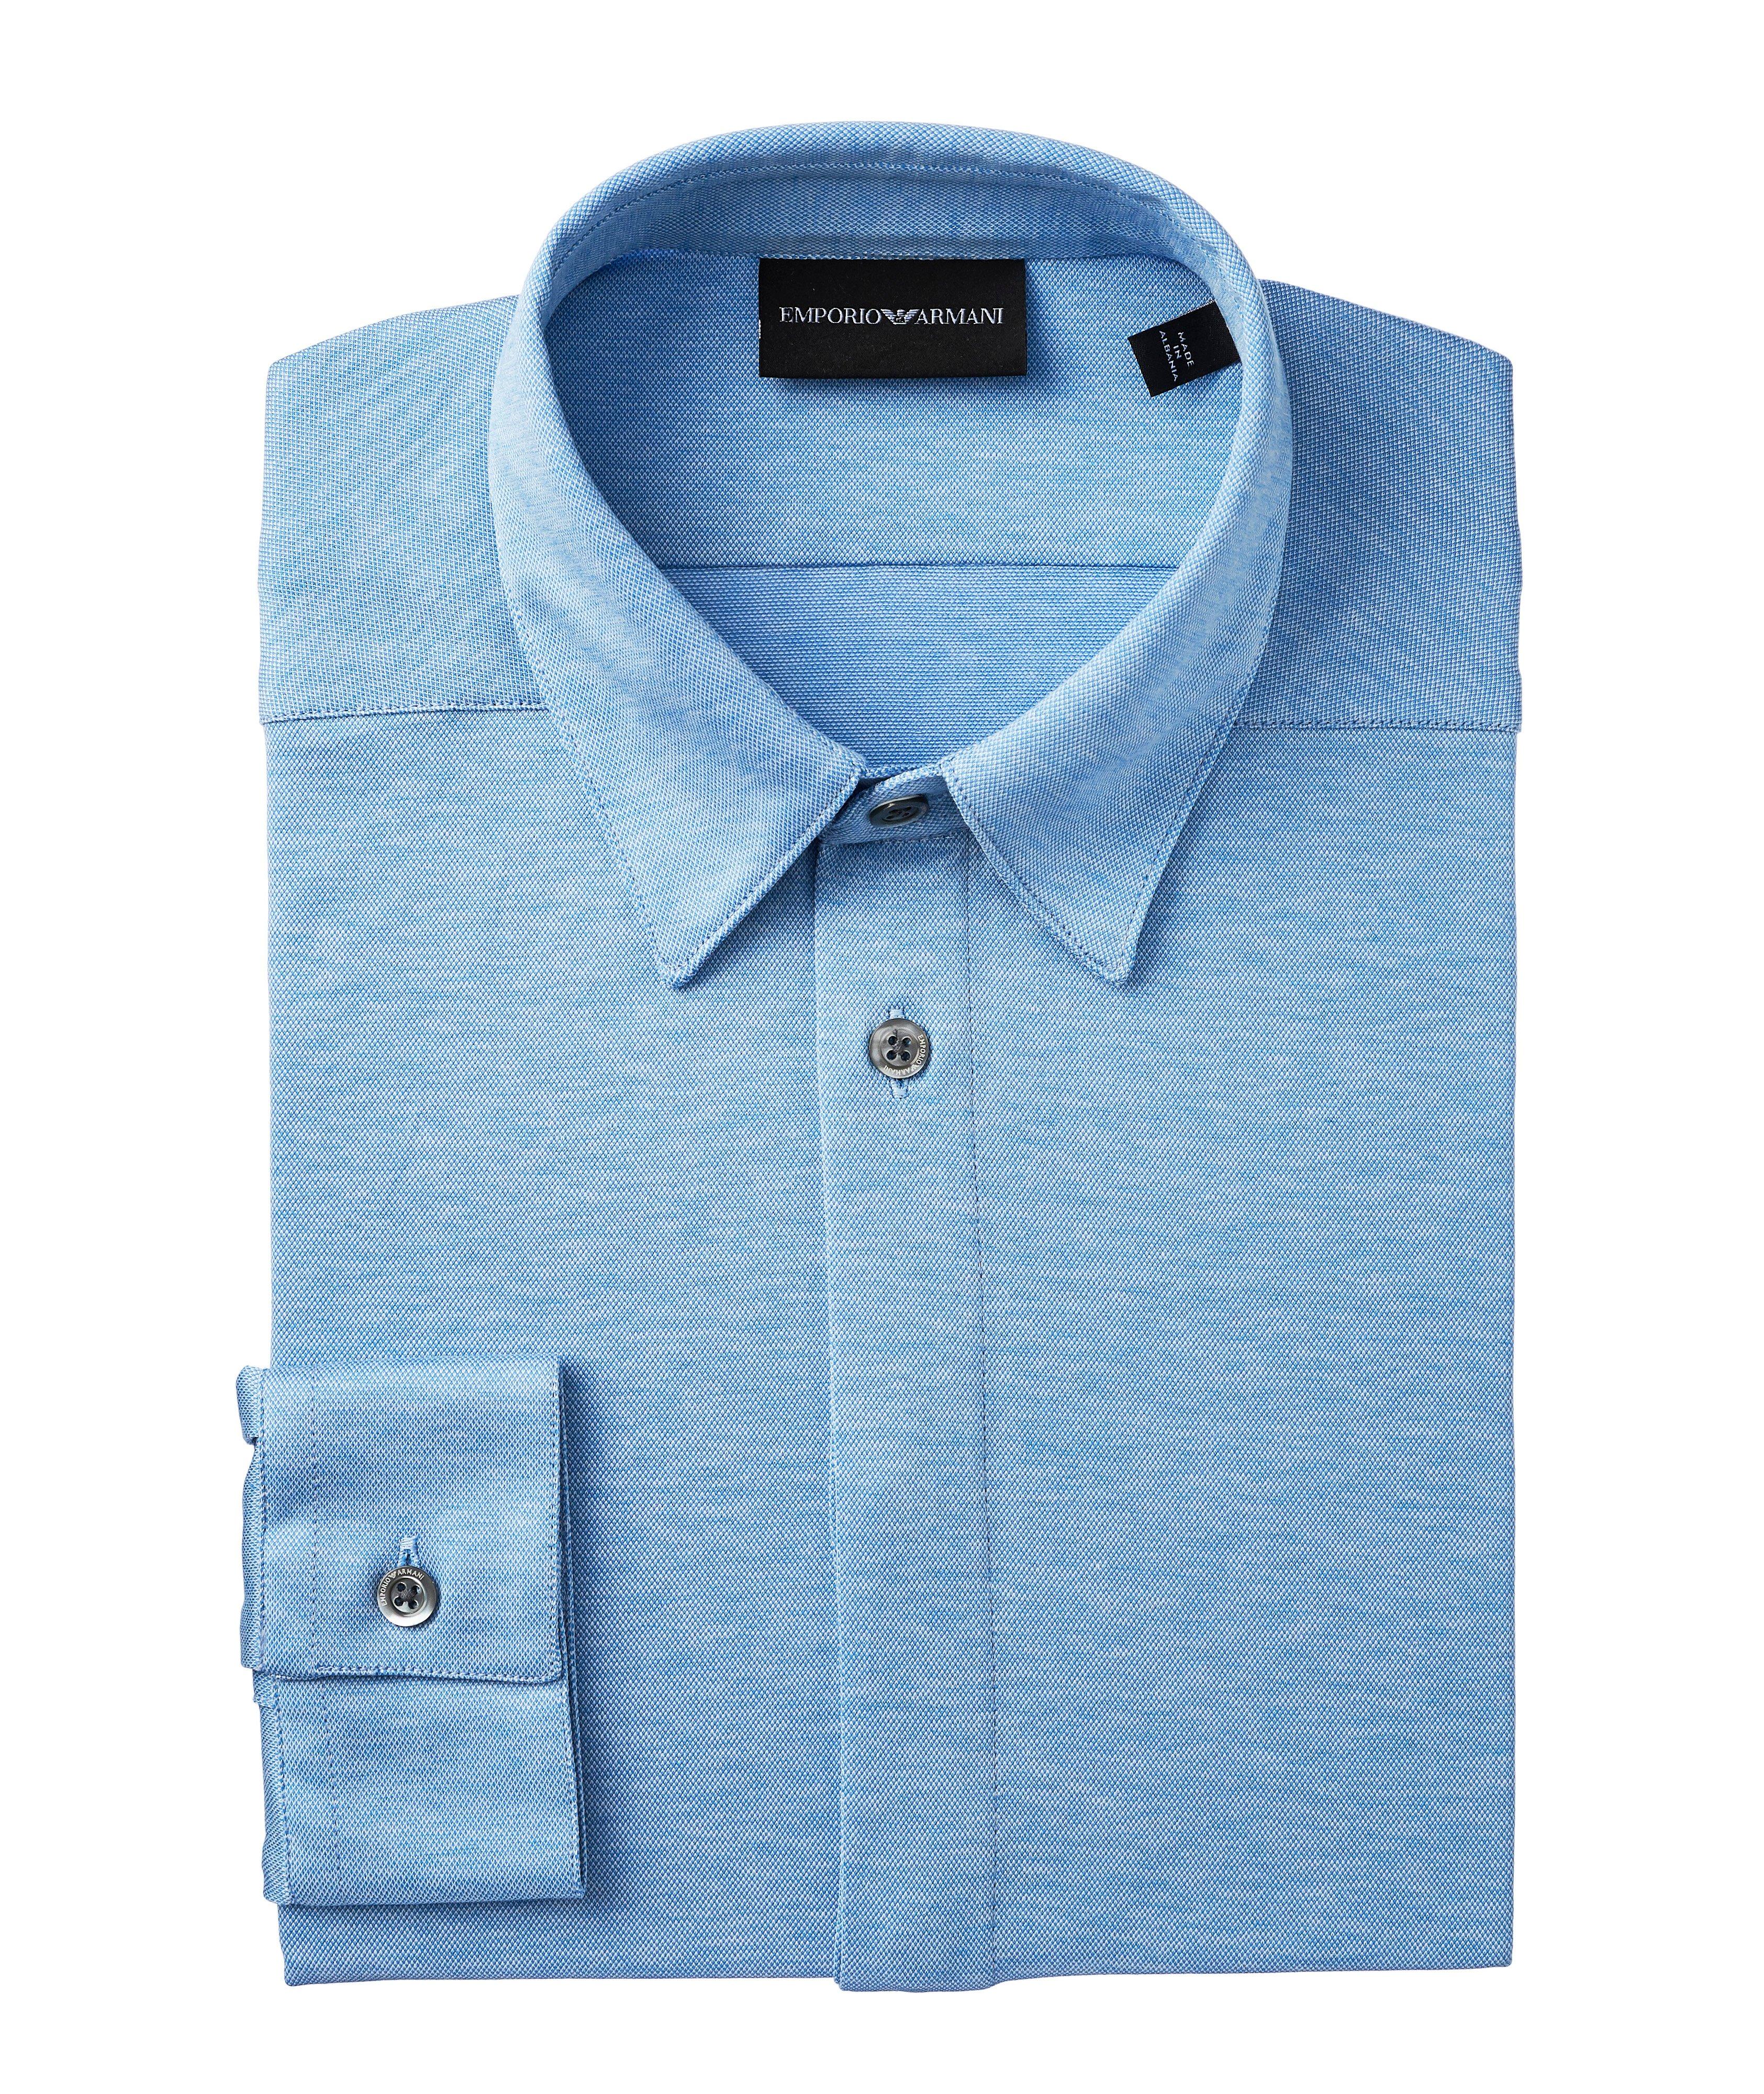 Slim-Fit Cotton-Jersey Shirt image 0